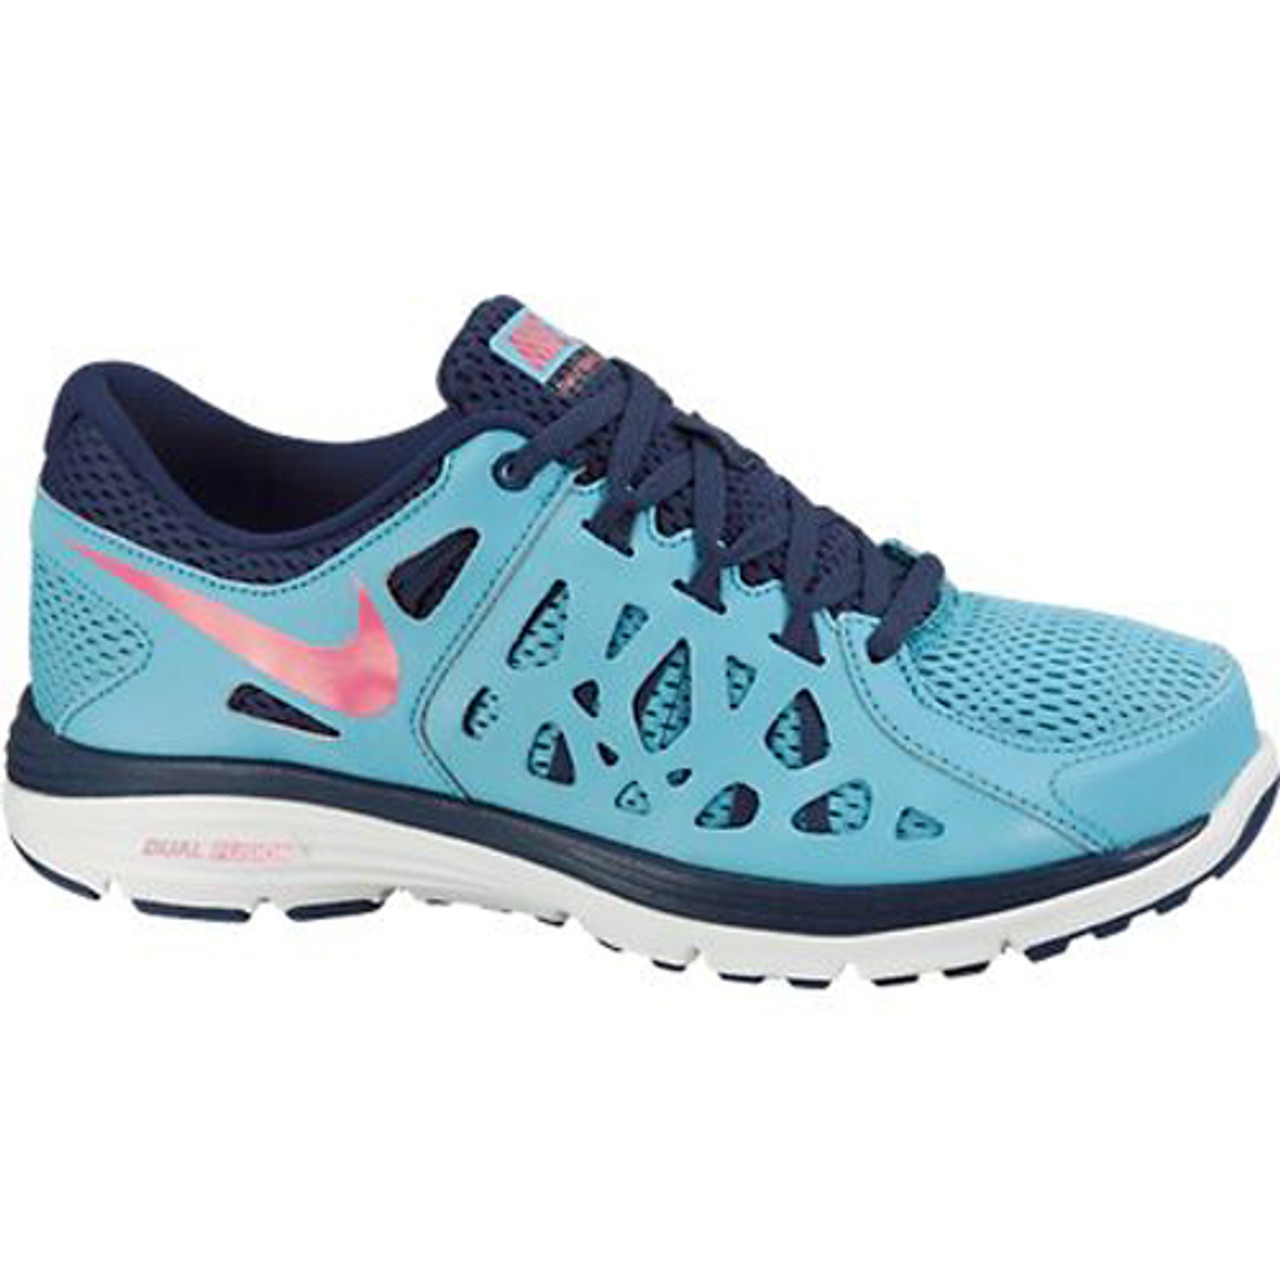 Nike Dual Fusion Run 2 Blue/Pink Ladies Running Shoes - Gamma Blue/Brave  Blue/White/Pink | Discount Nike Ladies Athletic & More - Shoolu.com |  Shoolu.com